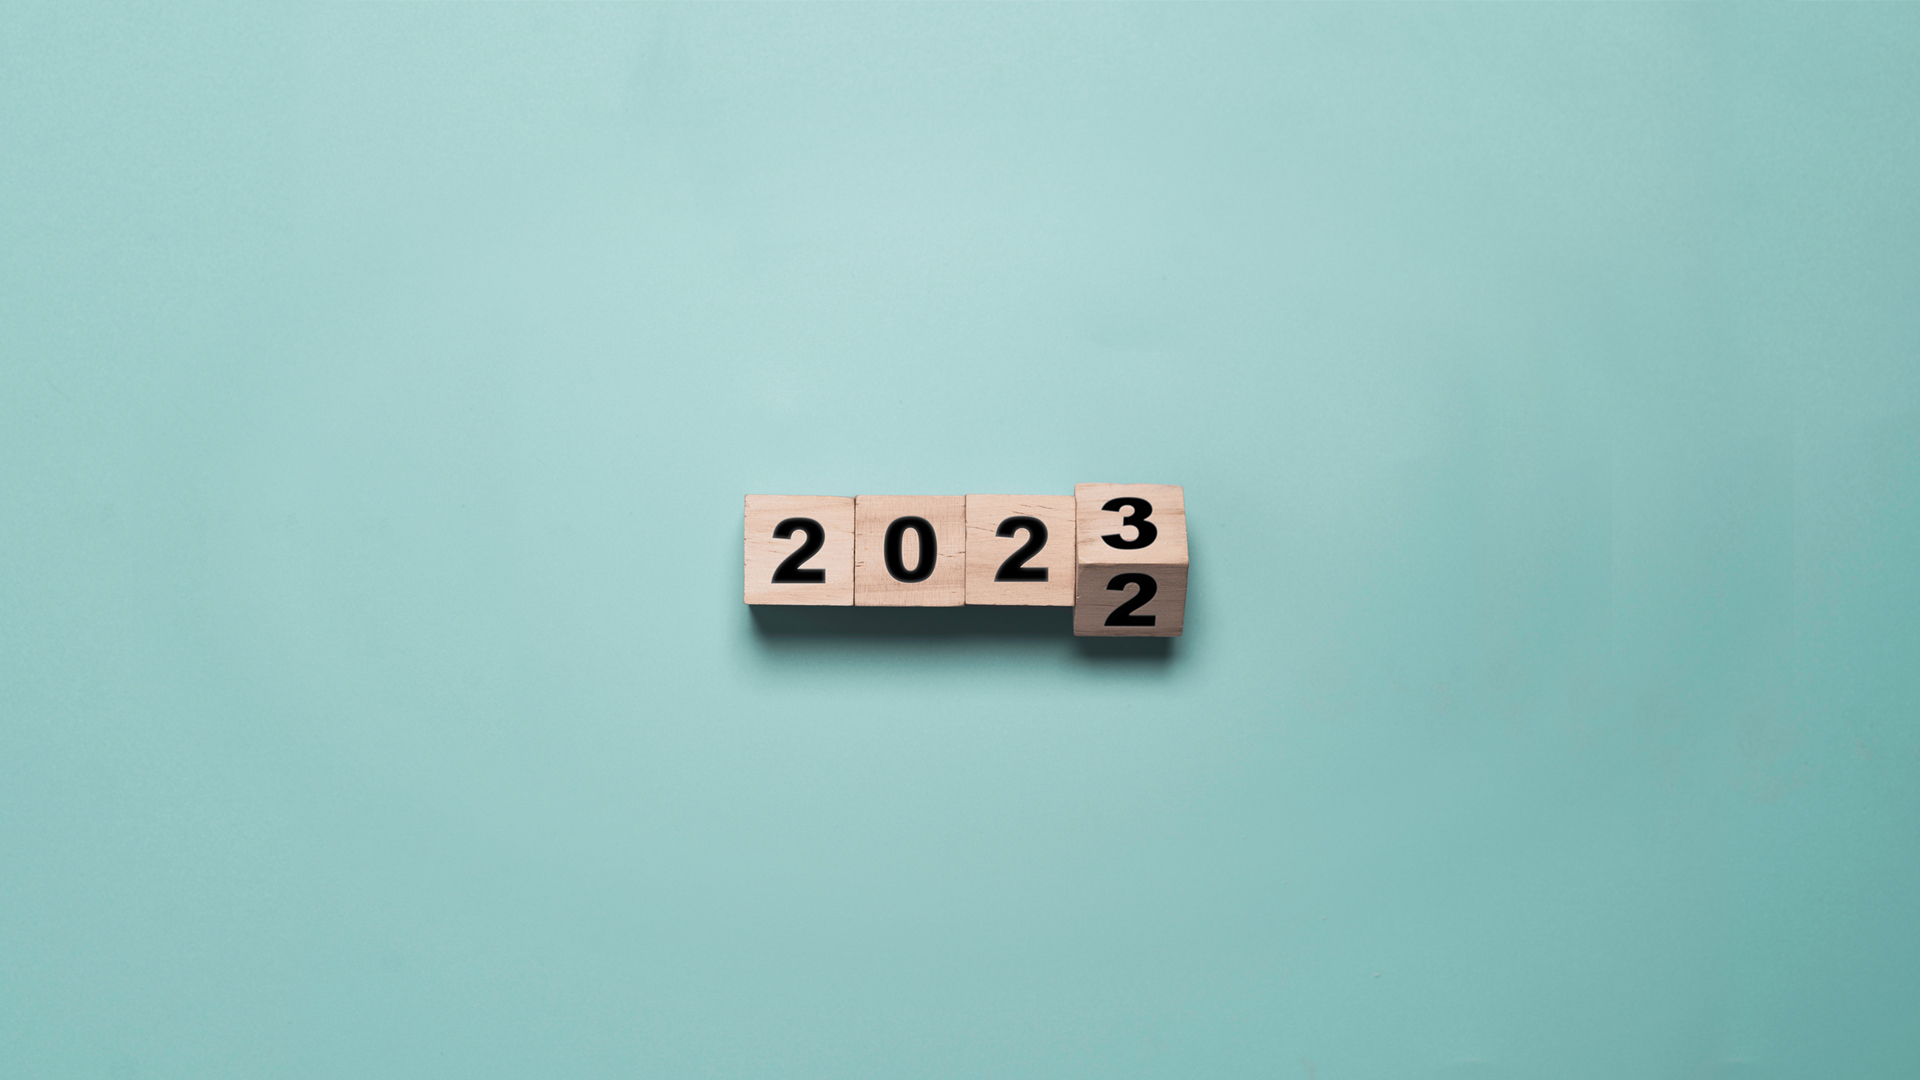 Eindejaarstips_2022-23. Blokjes hout met cijfers 2022-3 / Year-end tax tips